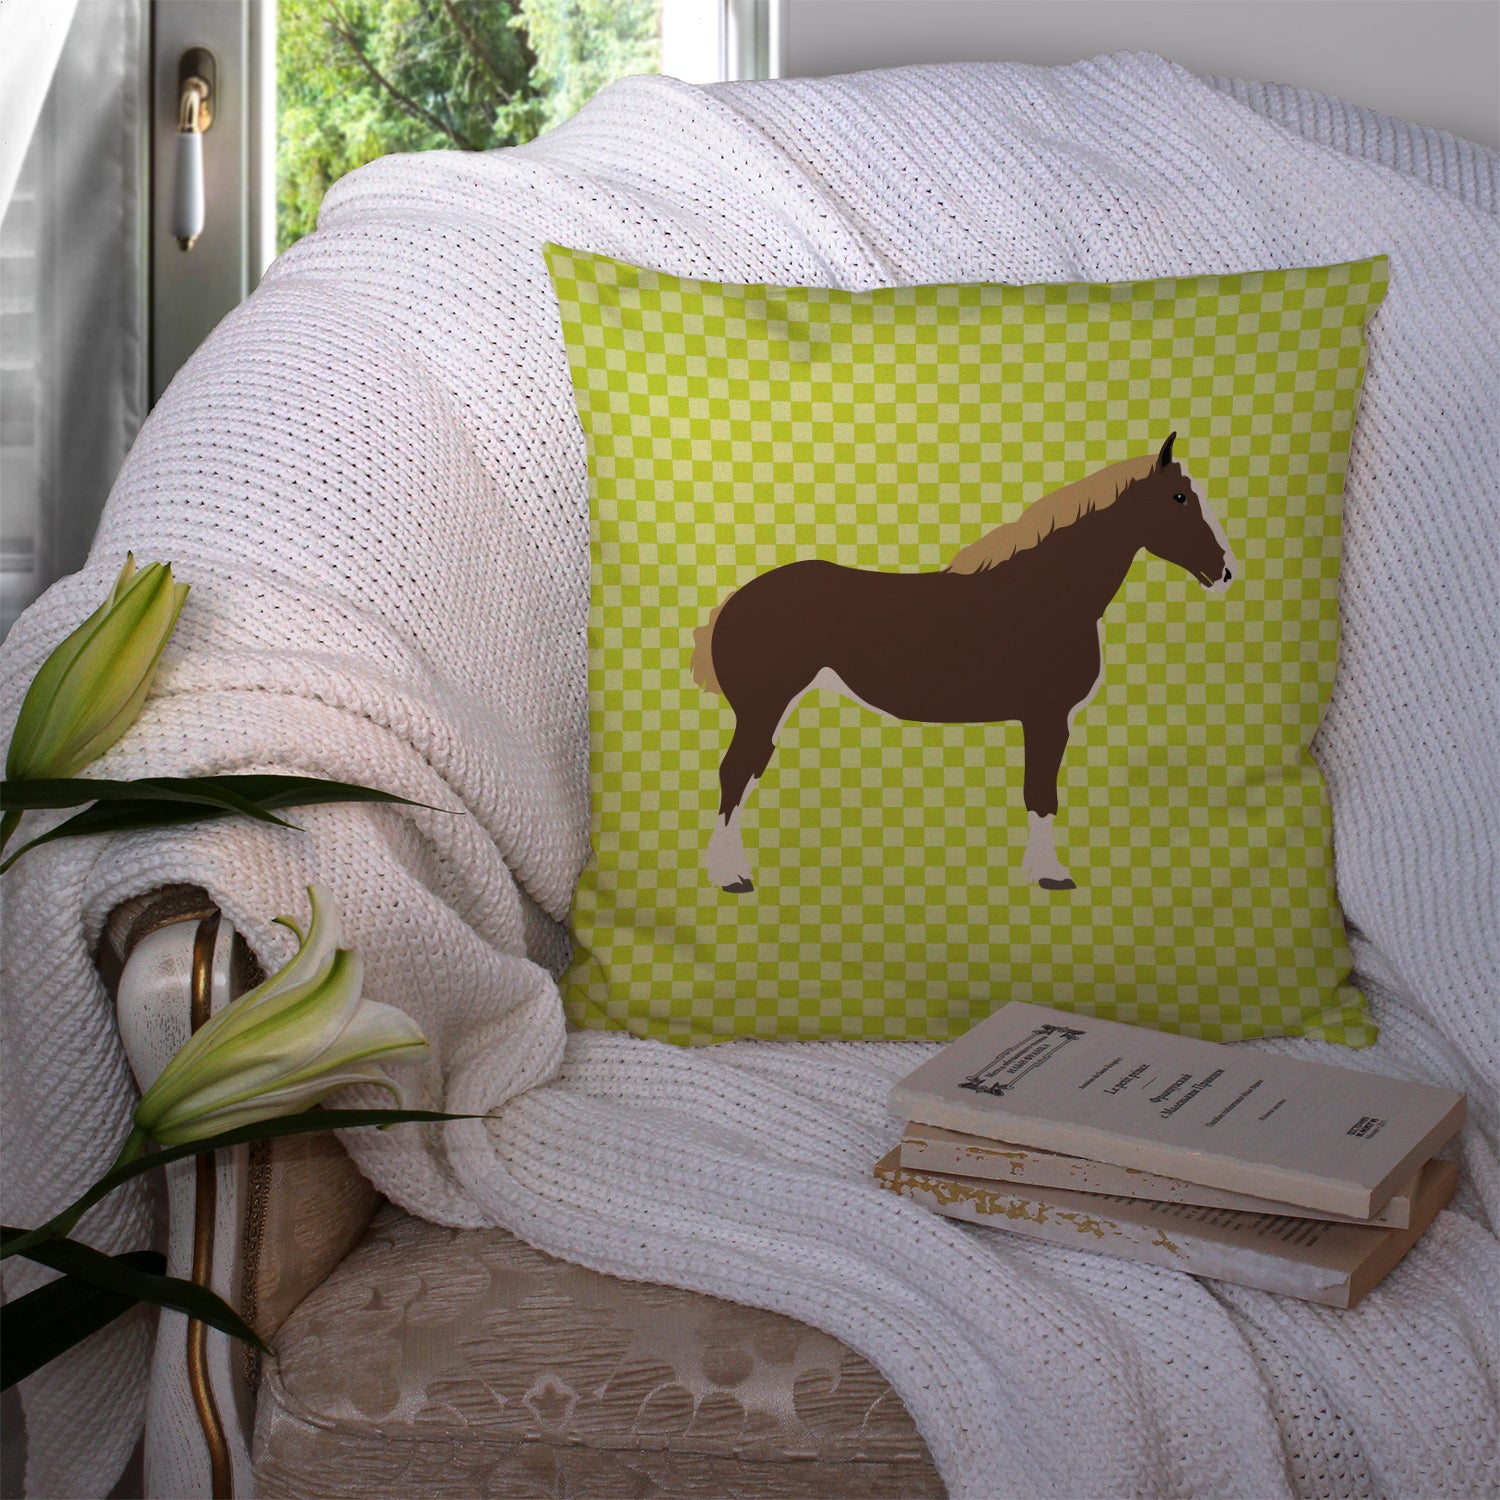 Percheron Horse Green Fabric Decorative Pillow BB7732PW1414 - the-store.com